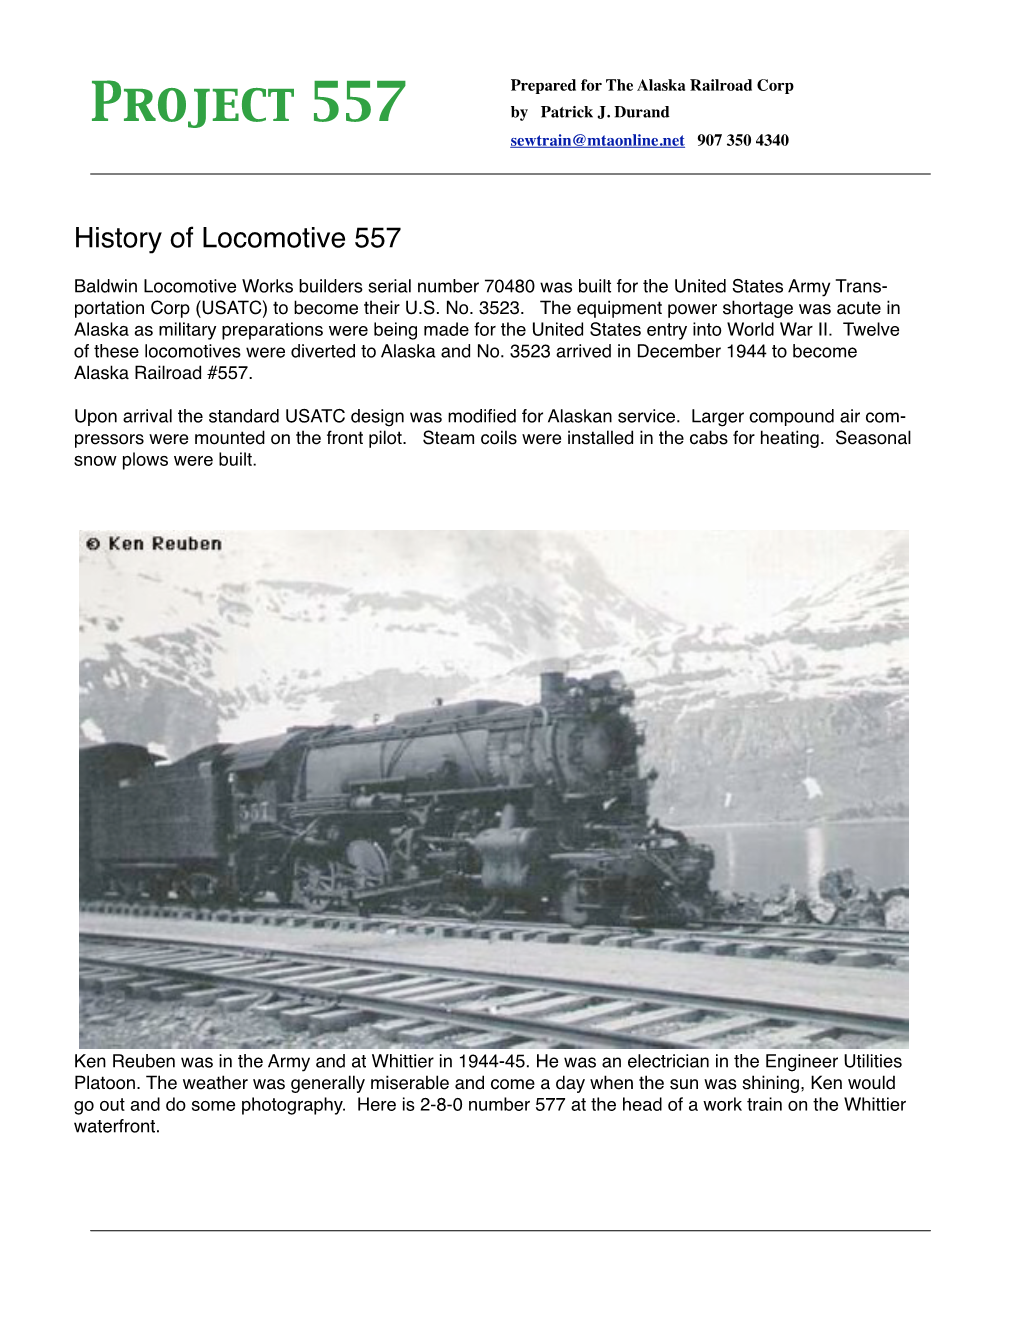 Project 557 Loco History